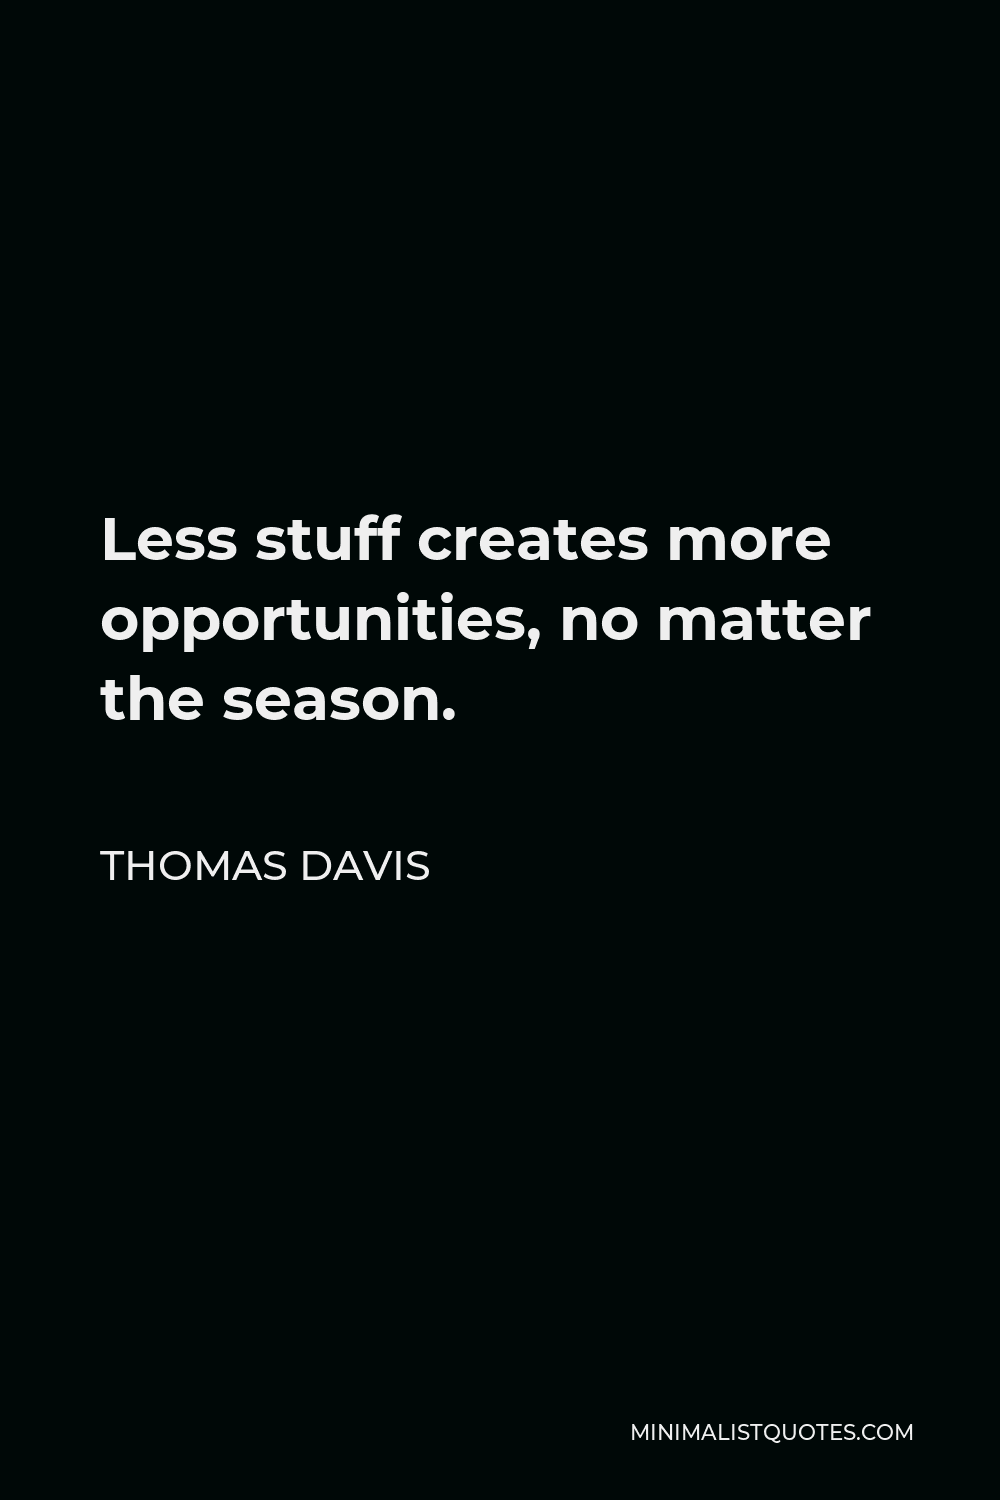 Thomas Davis Quote - Less stuff creates more opportunities, no matter the season.